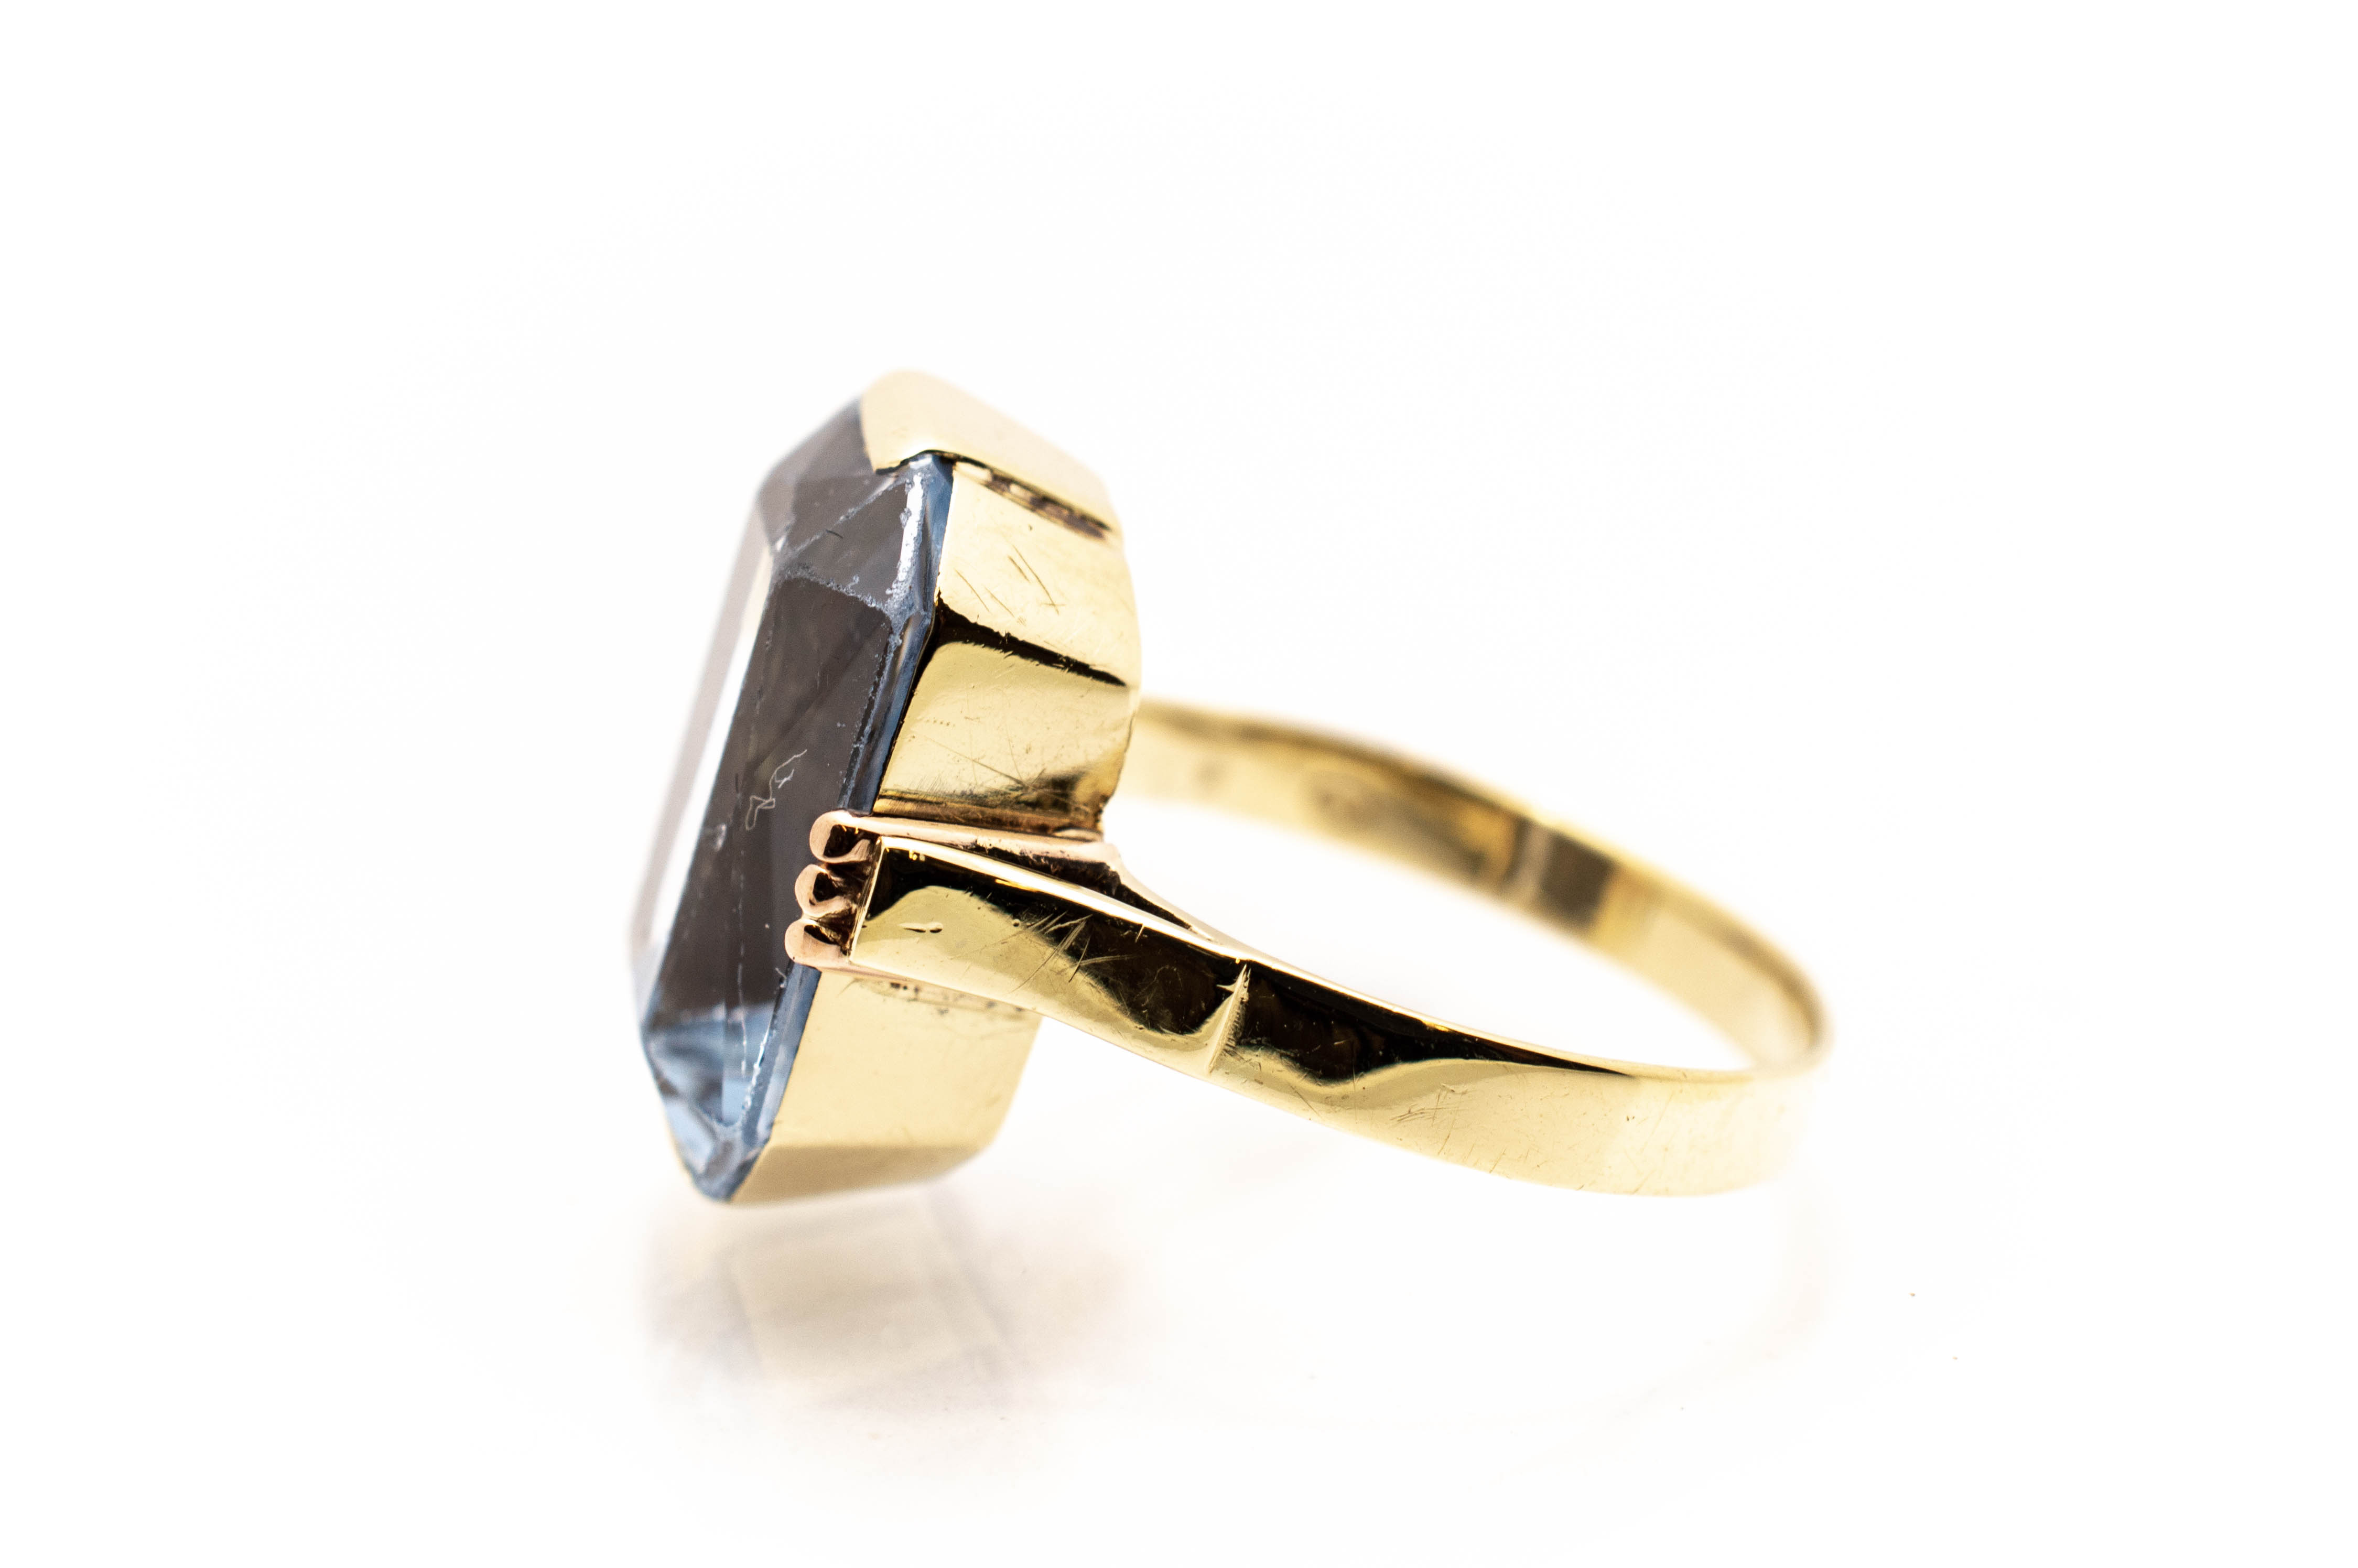 Starožitný zlatý prsten s modrým kamenem - akvamarín, 1. republika, vel. 53